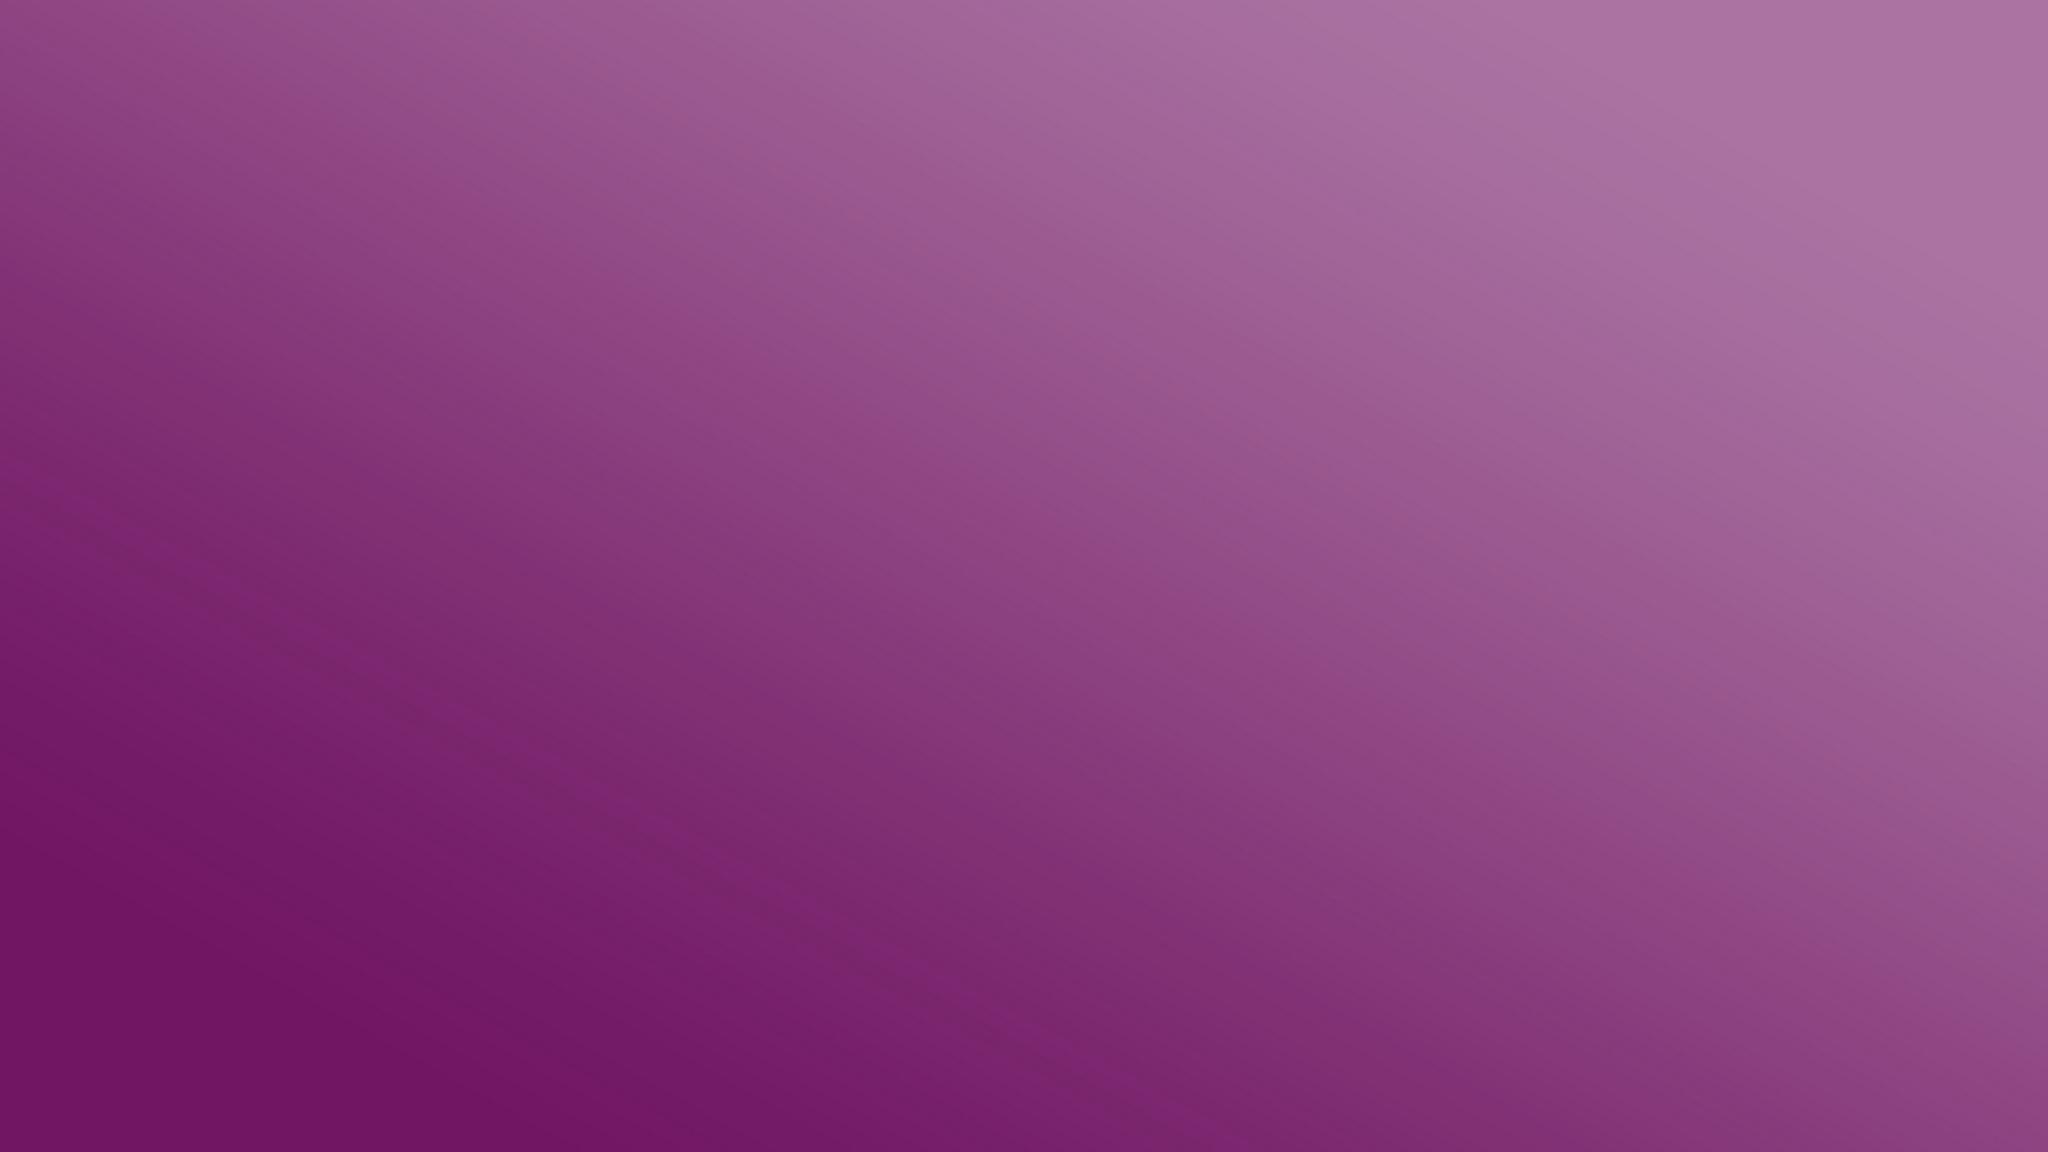 Download wallpaper 2048x1152 purple, continuous, background